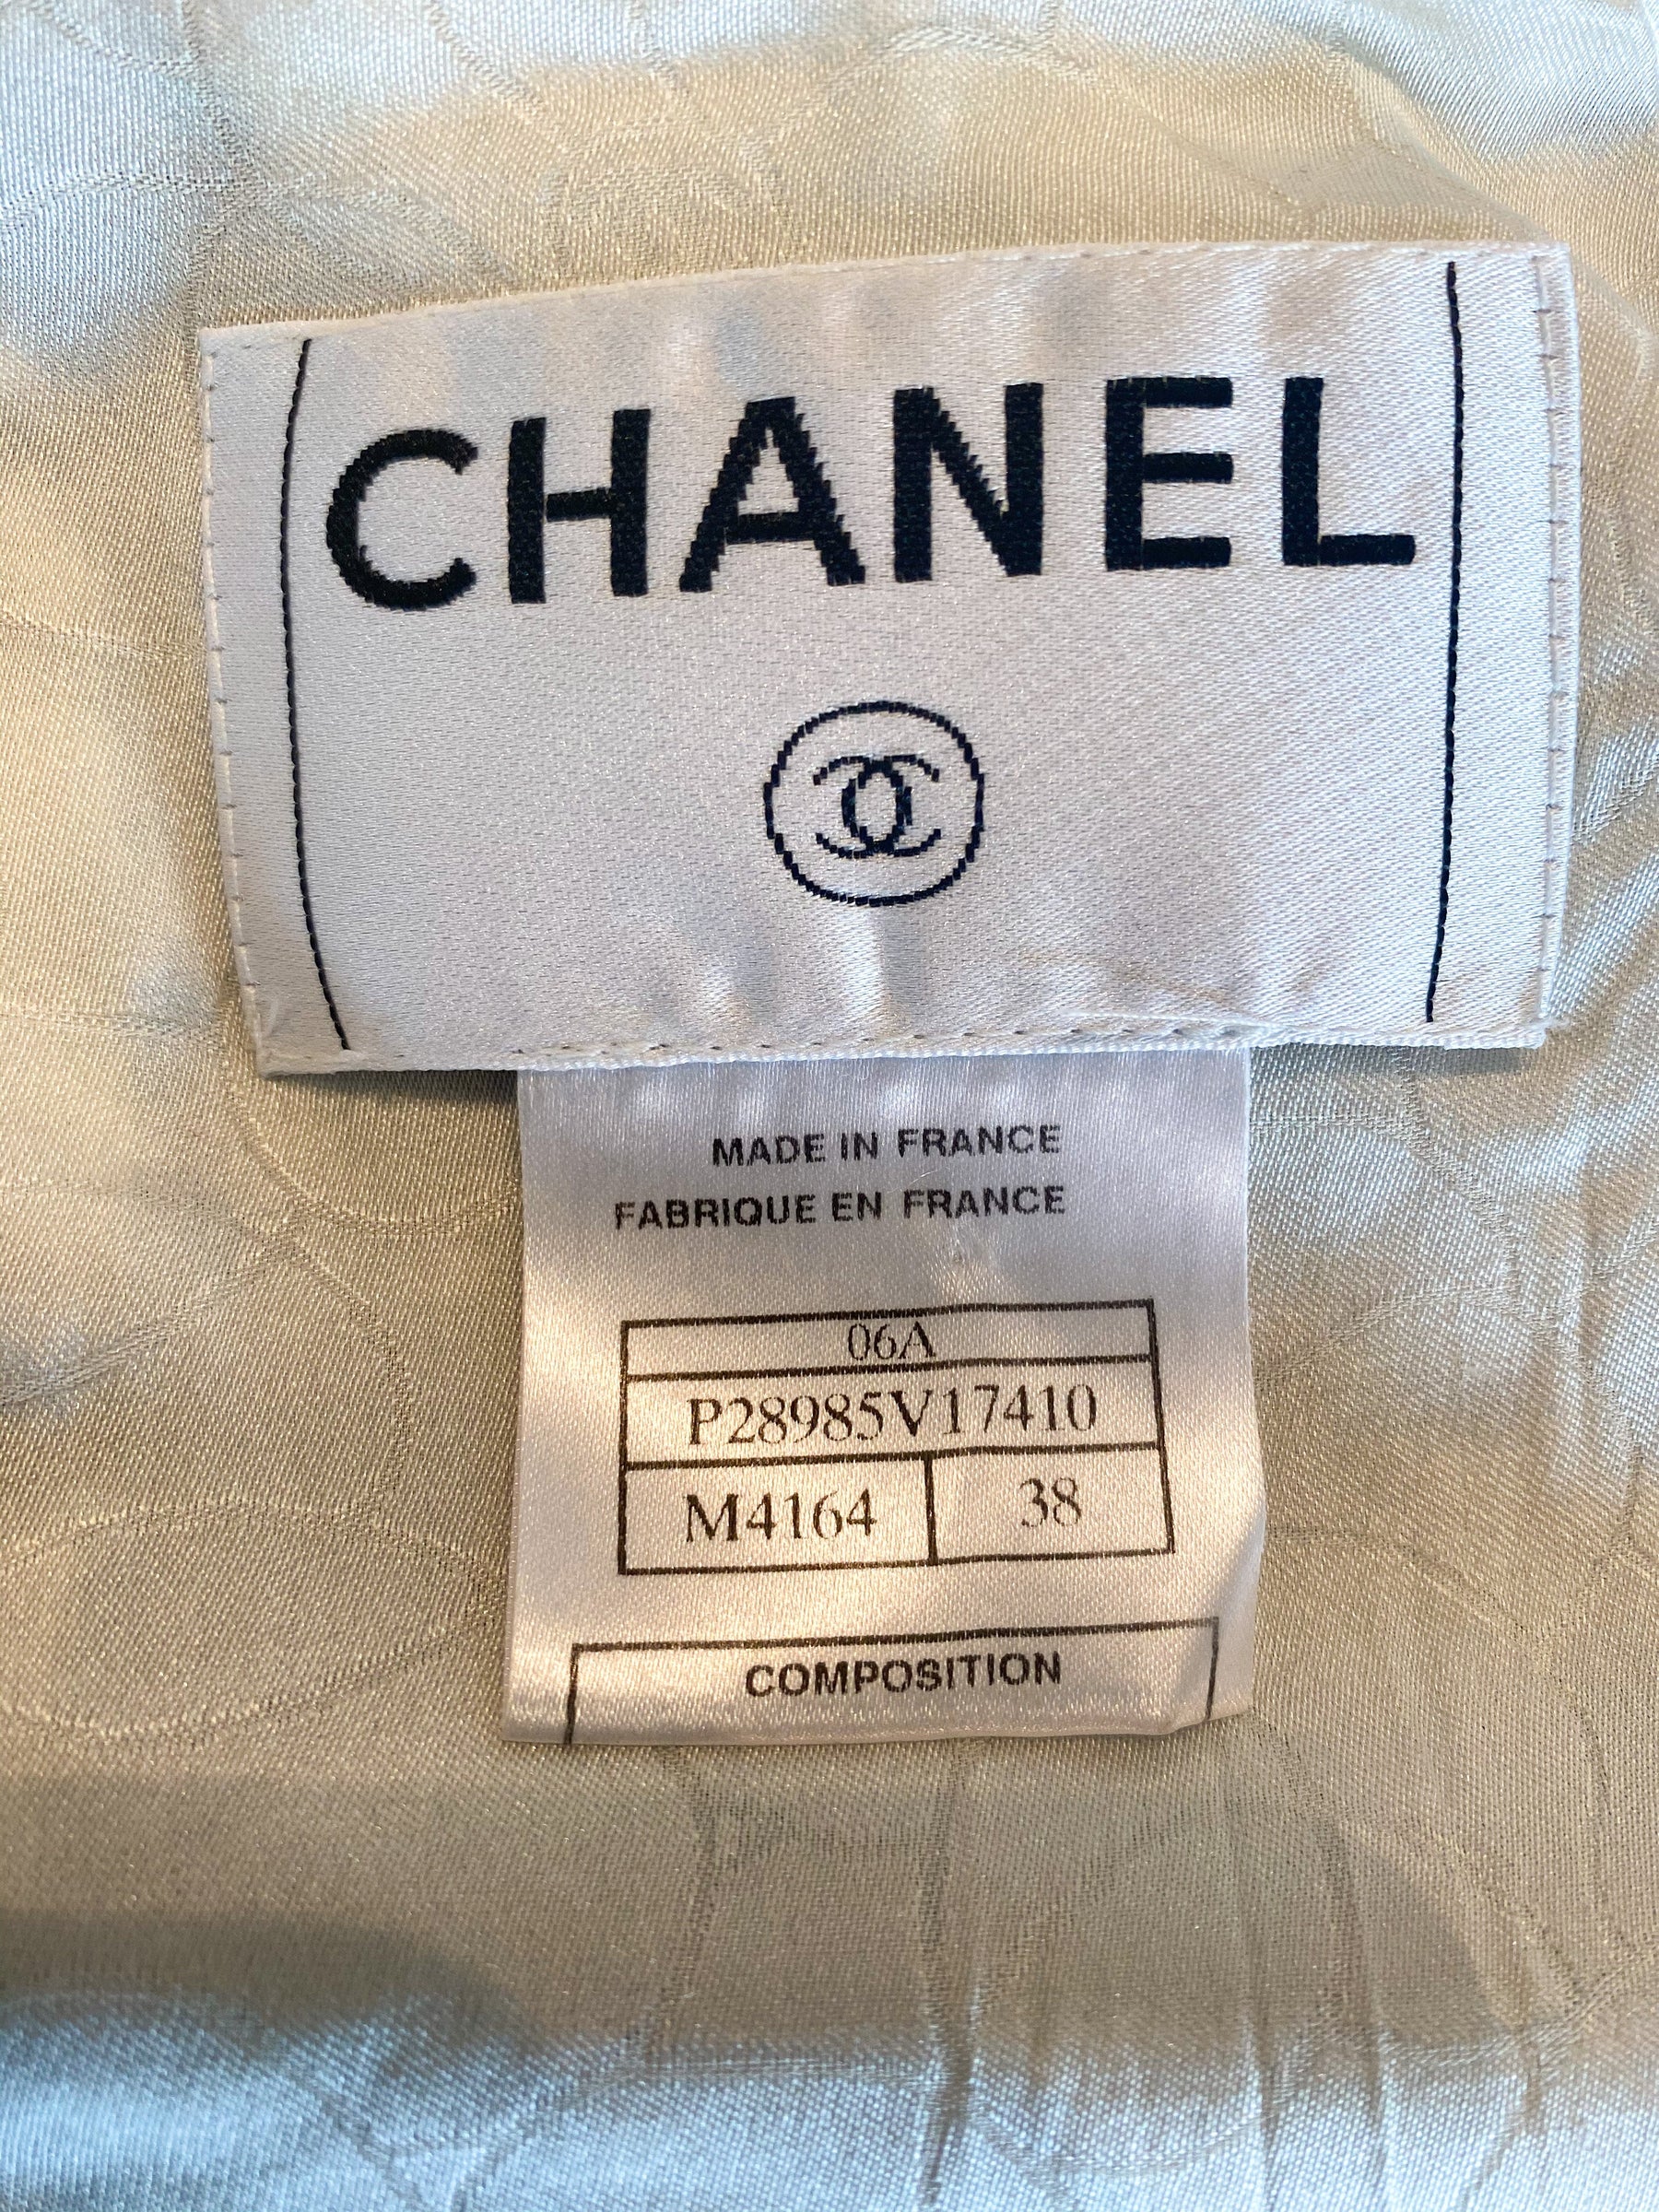 Chanel Tweed Plaid Suit Jacket Blazer Label